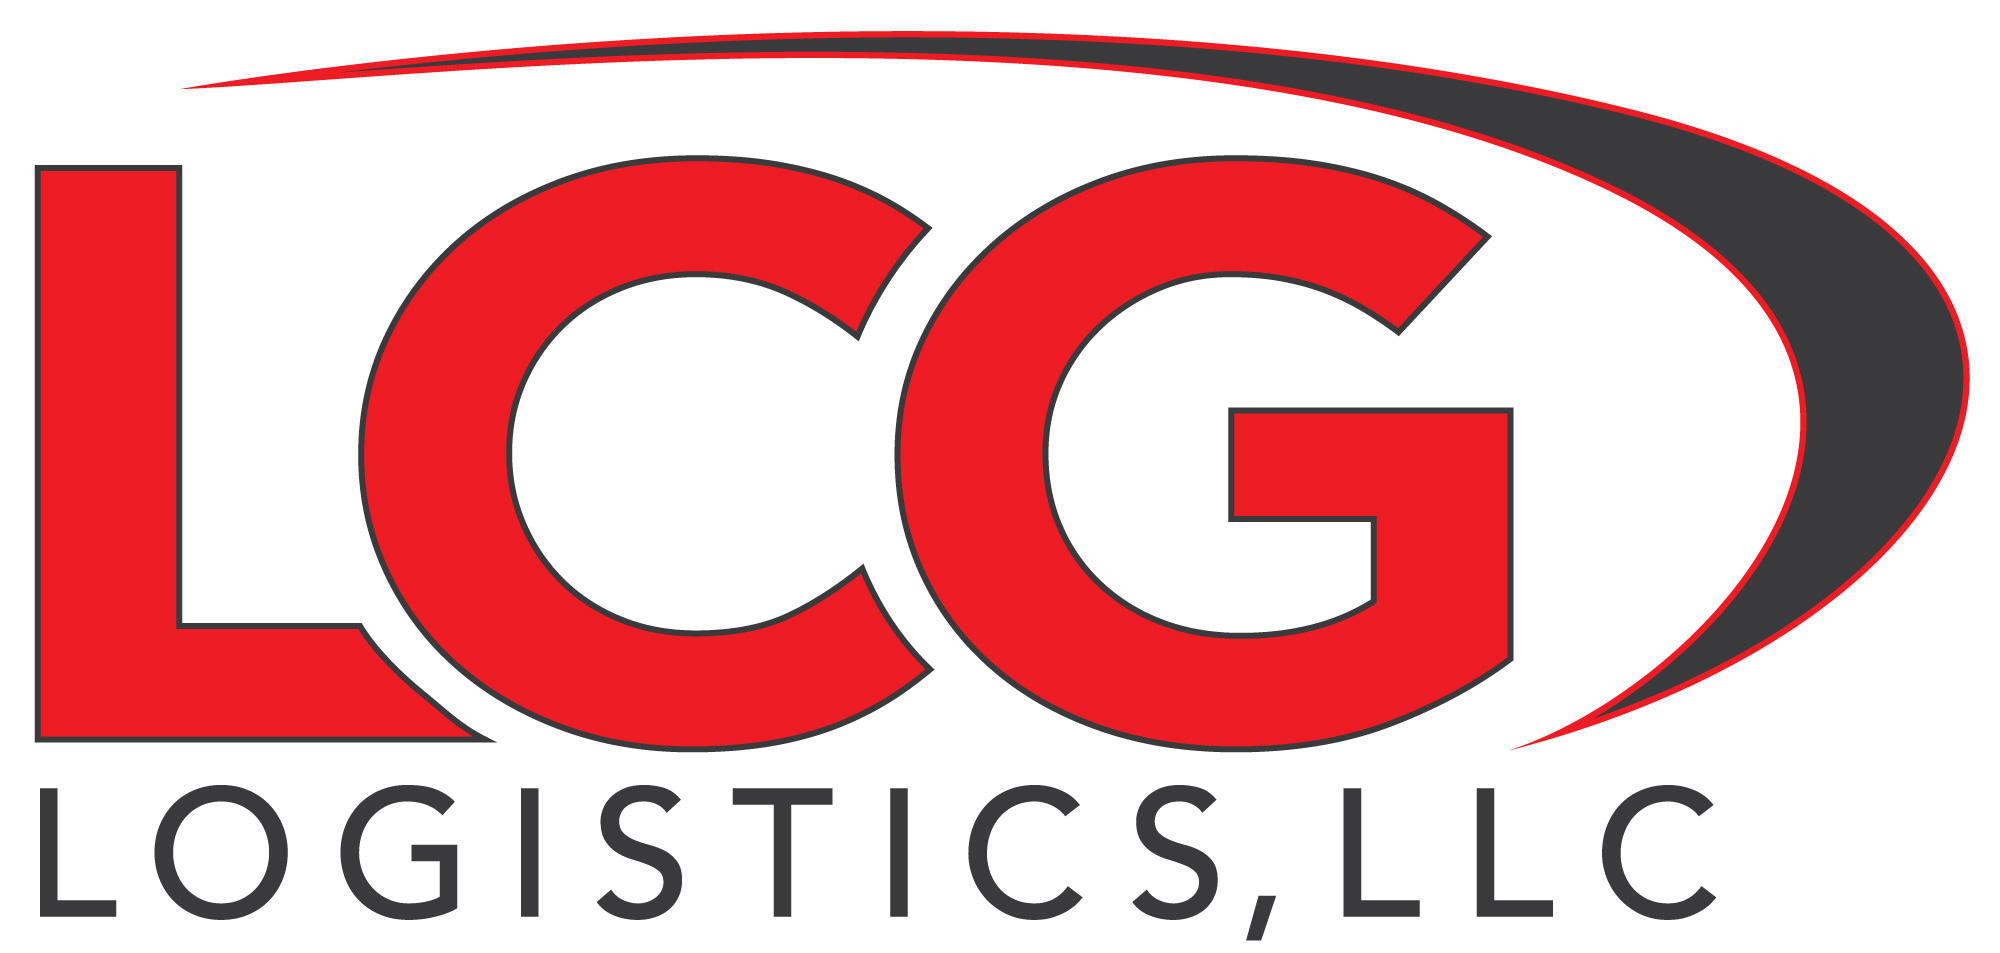 LCG Logistics LLC Photo